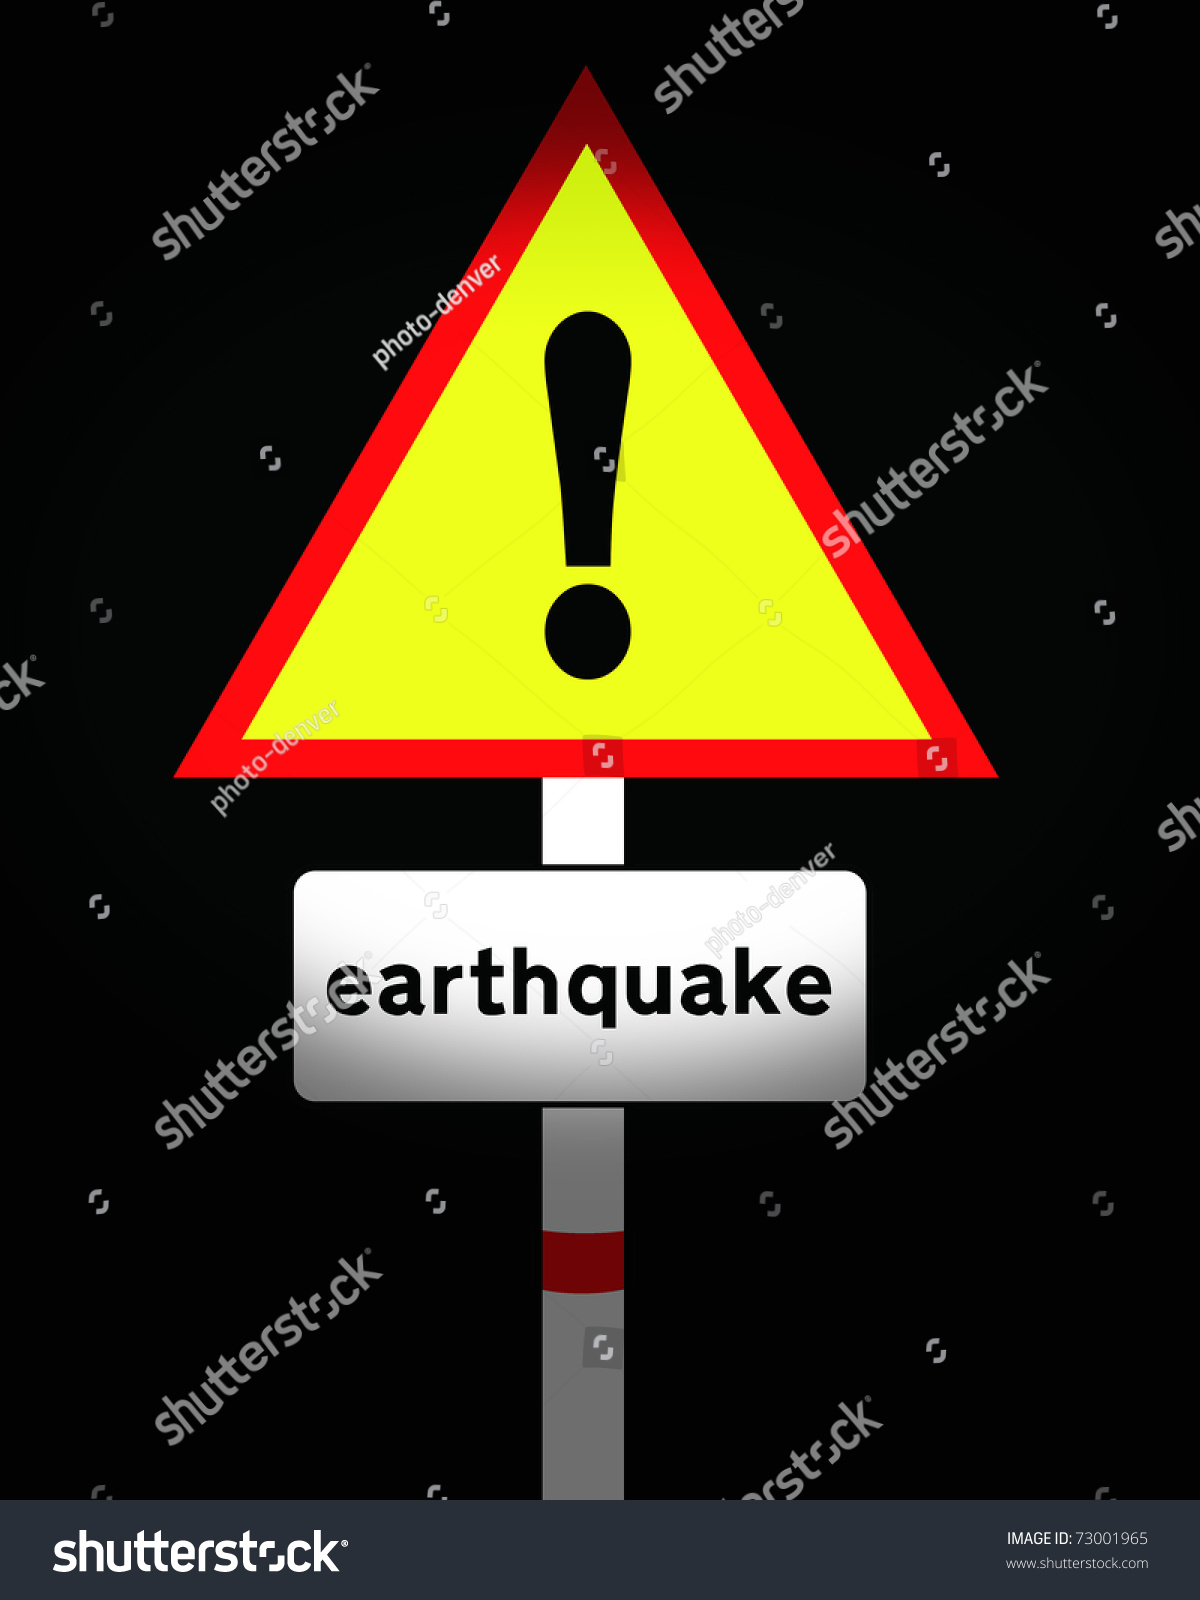 Earthquake Warning Sign Stock Photo 73001965 : Shutterstock